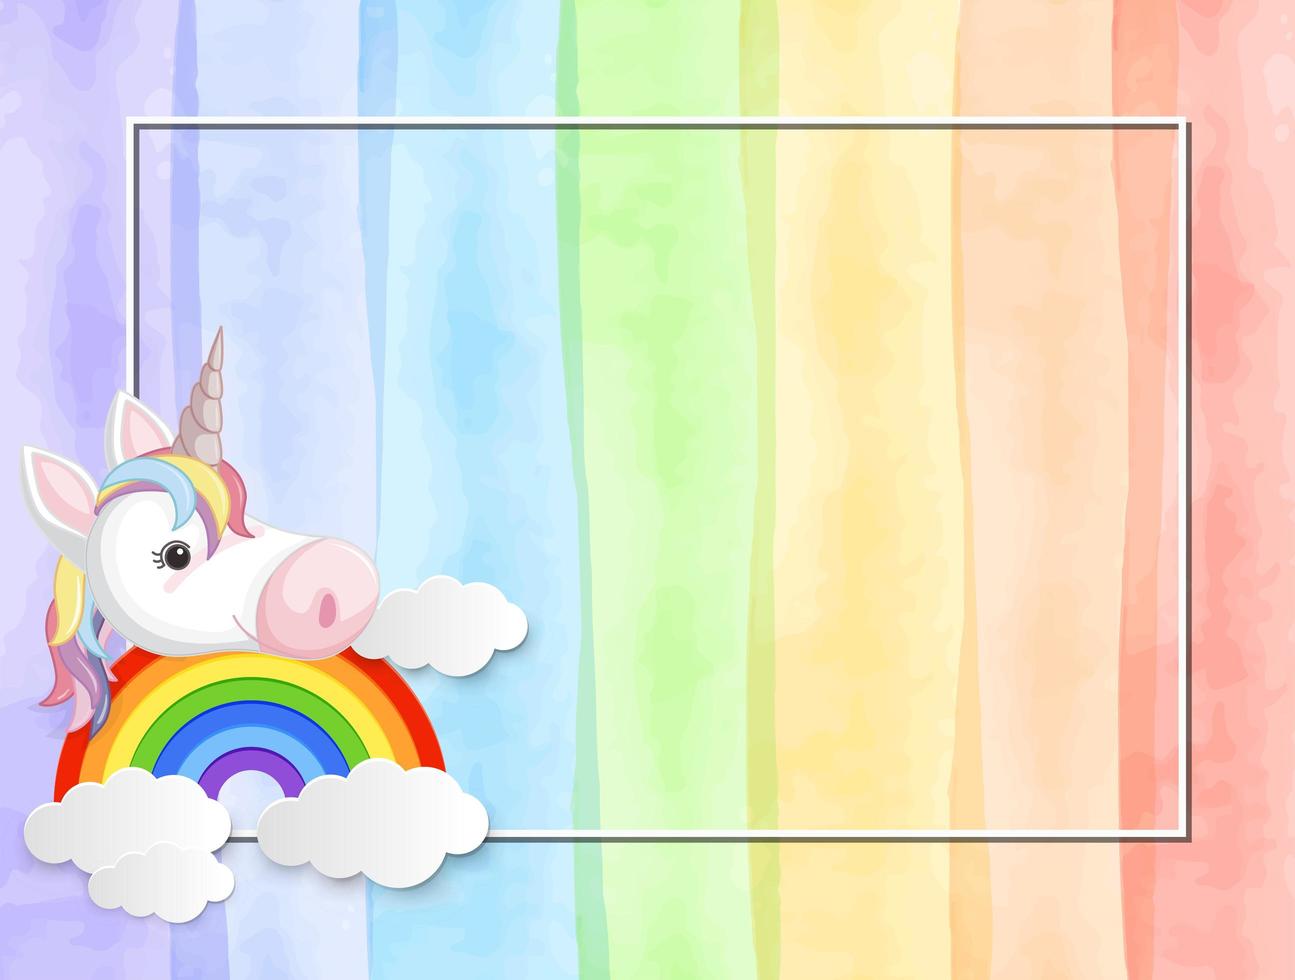 A Pastel Color Unicorn Background vector